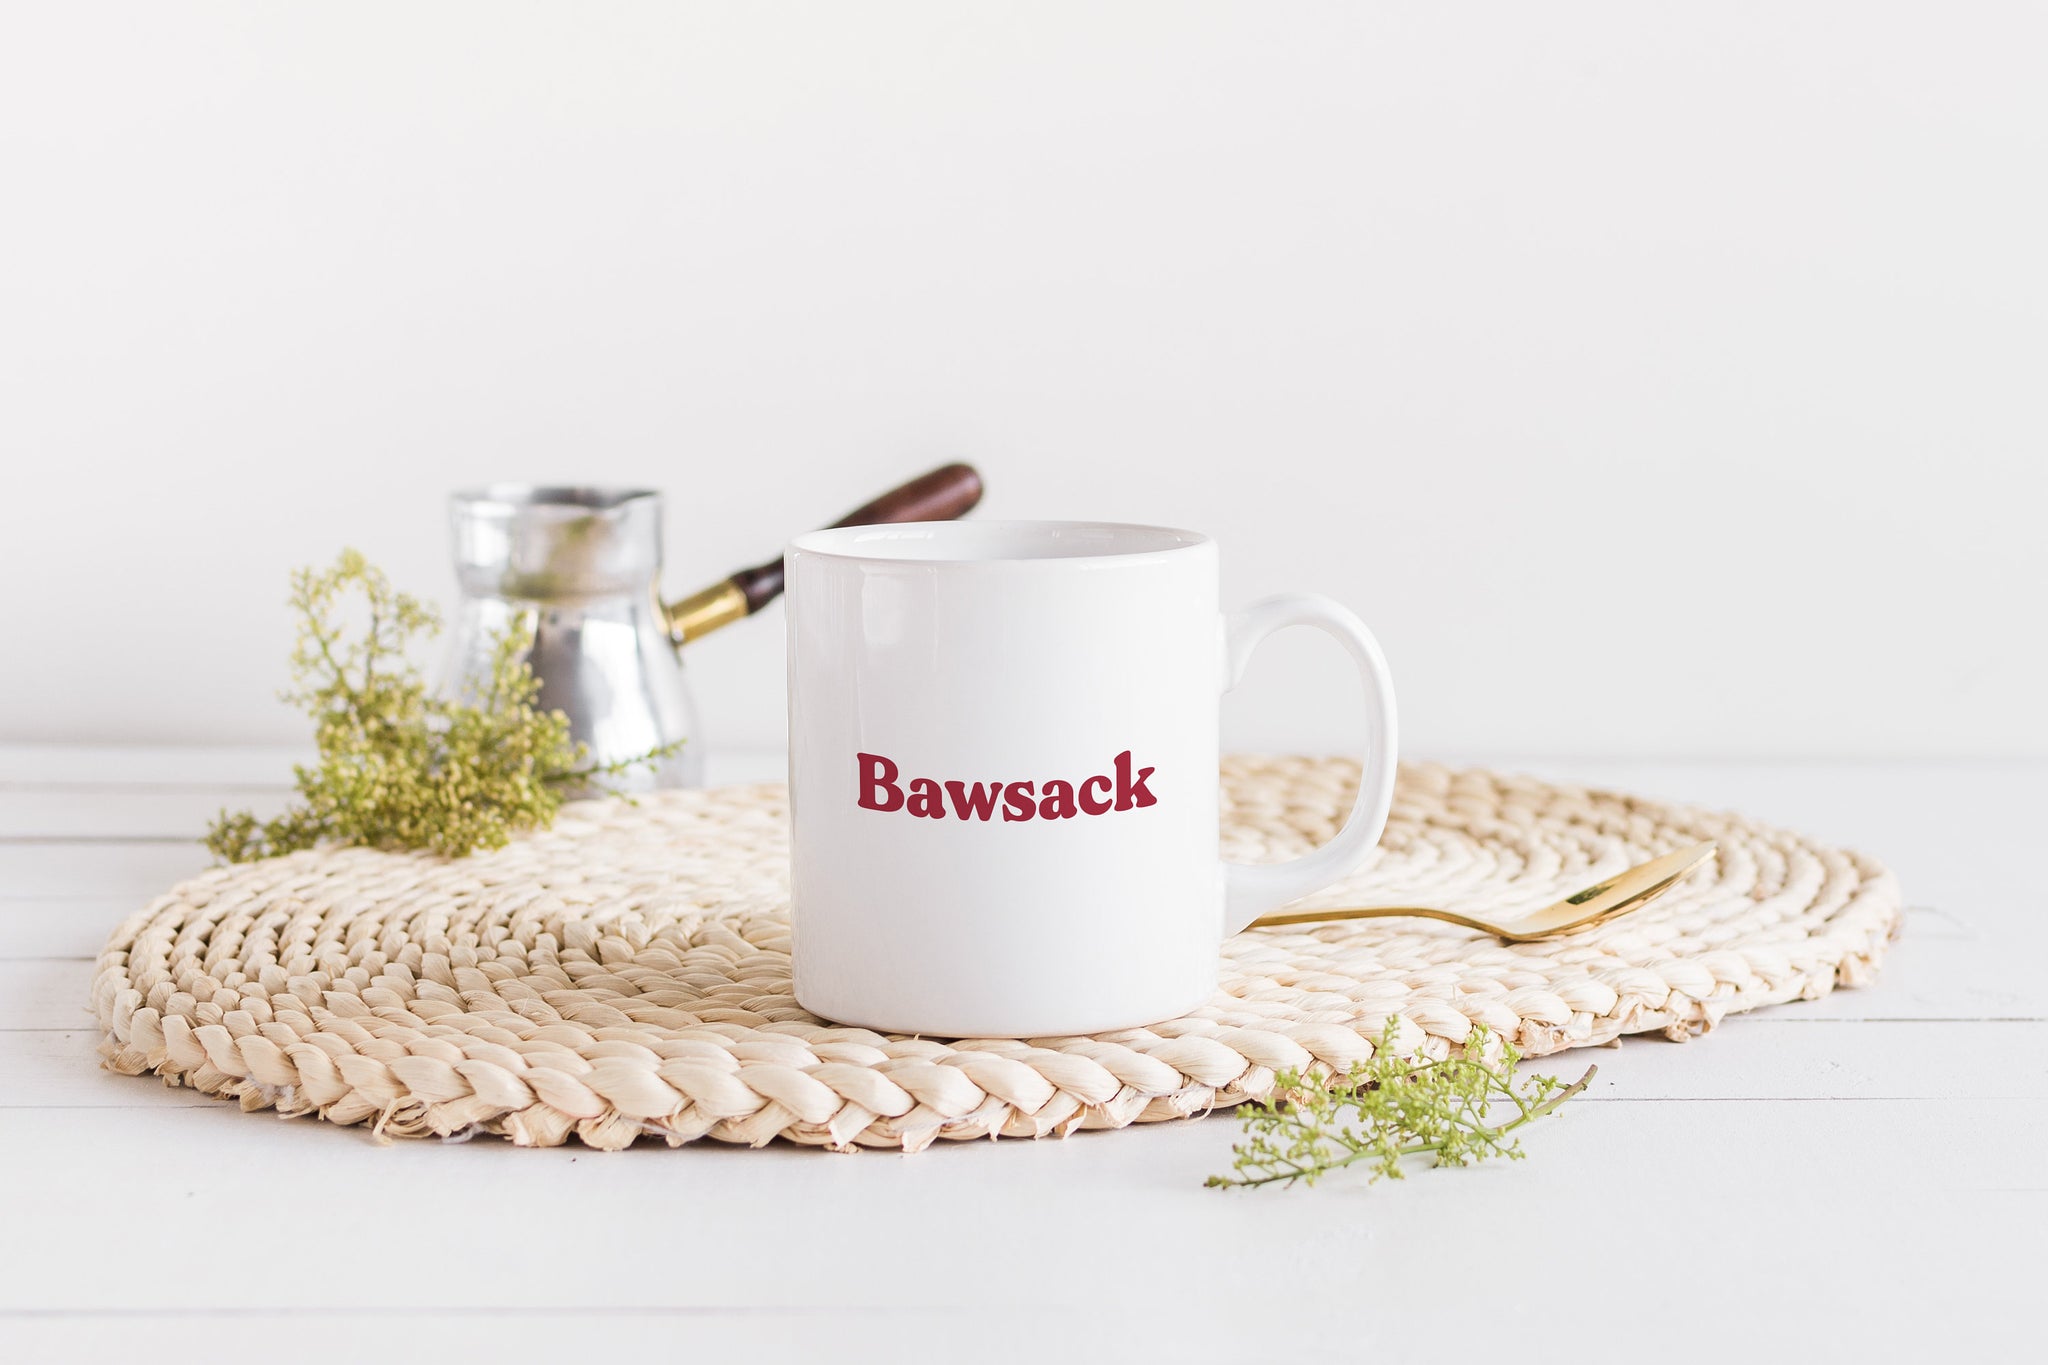 Bawsack Scottish Sayings Slang Mug